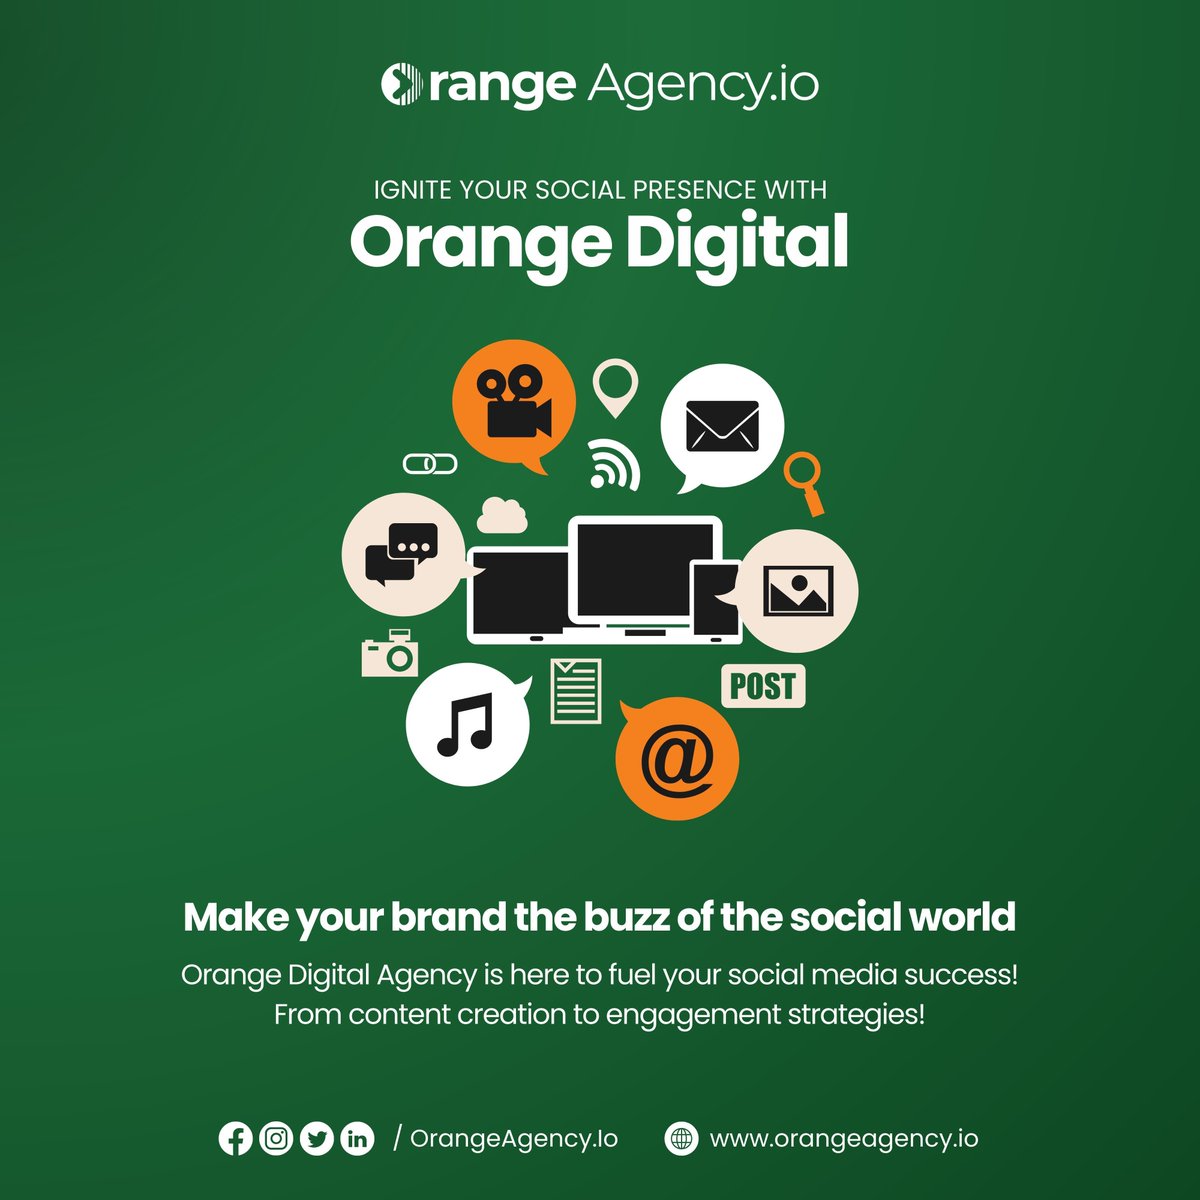 Ignite Your Social Presence with Orange Digital.

Social media marketing experts! orangeagency.io

#OrangeAgency #SocialMedia #DigitalMarketing #SocialMediaManagement #SocialMediaServices #OnlinePresence #ContentCreation #Engage #Niger #ElonMusk #Titanic #TheEqualizer3